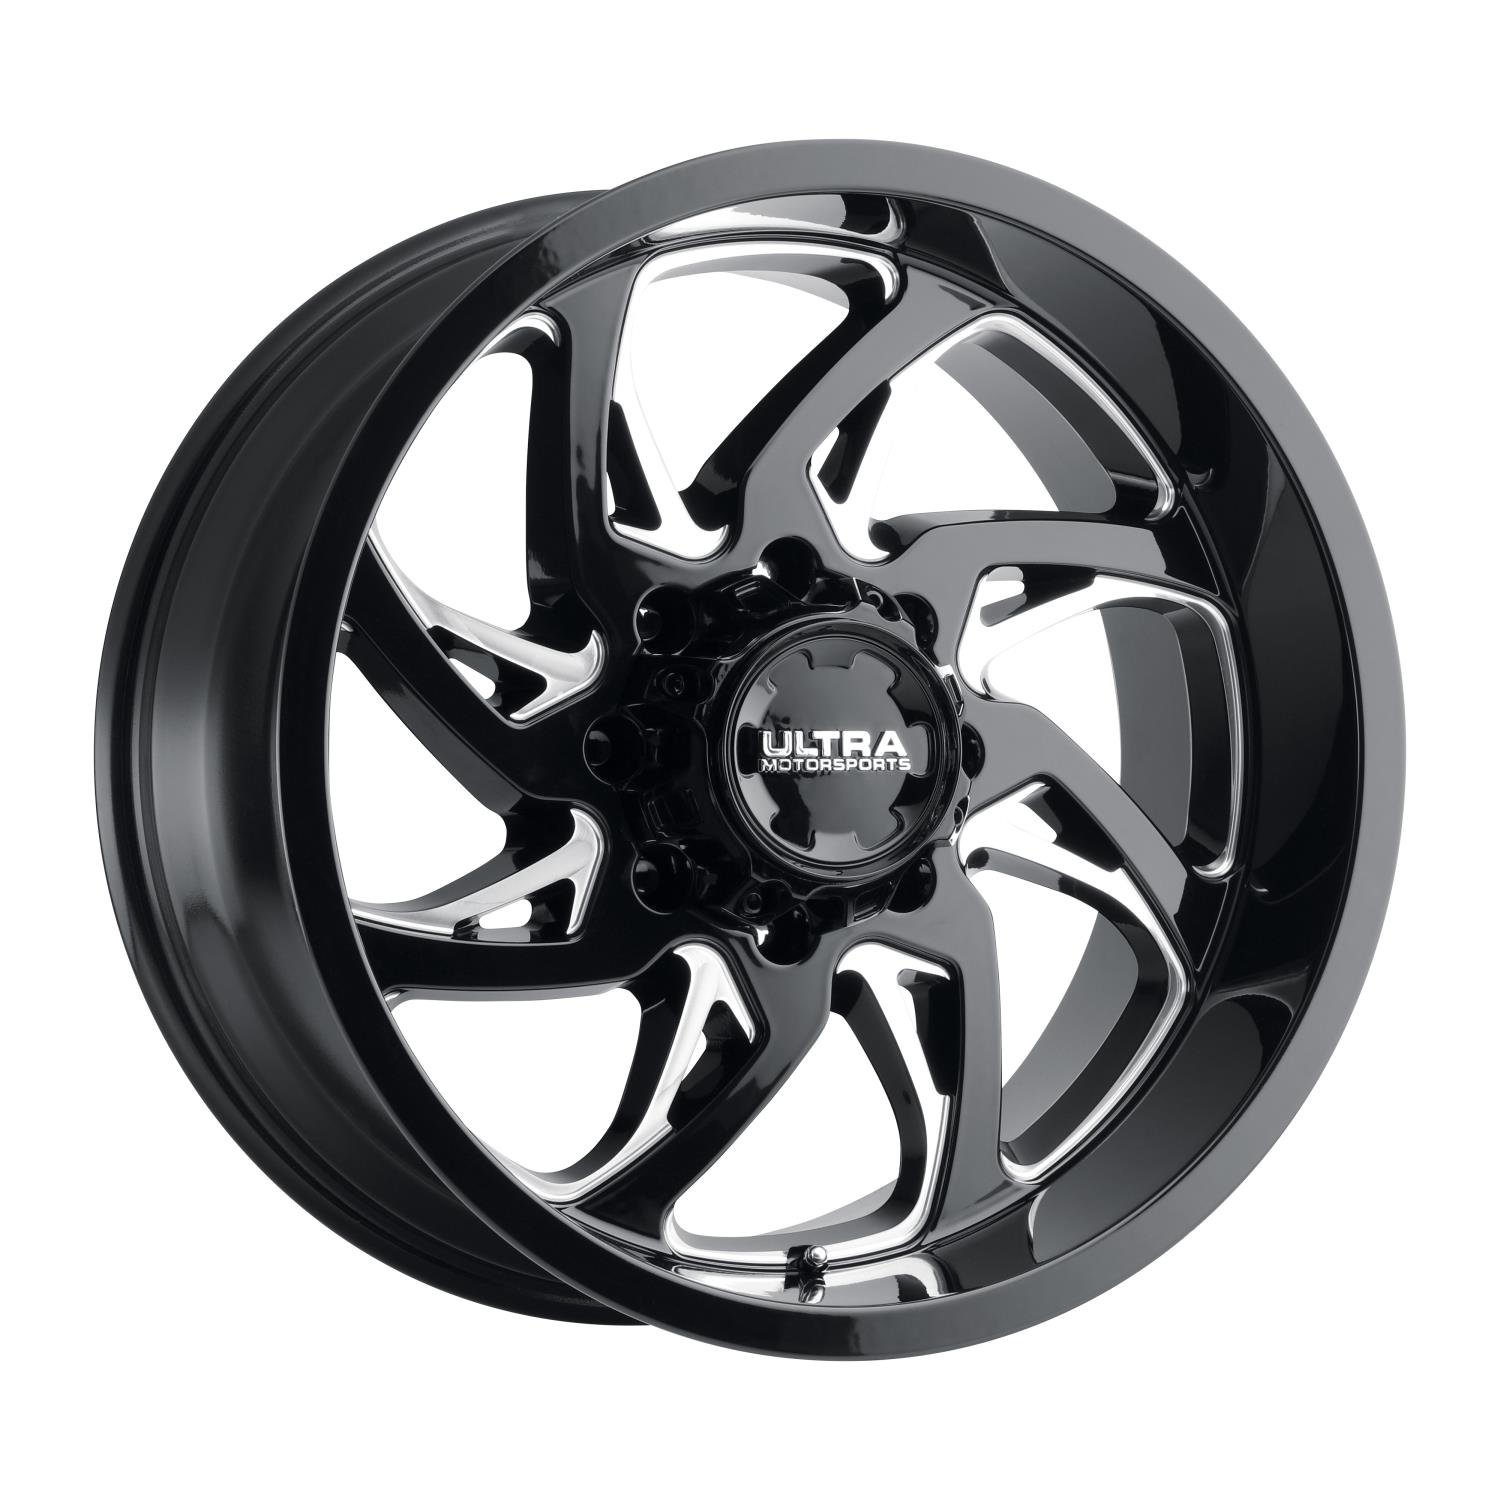 230-Series Villain Wheel, Size: 17x9", Bolt Pattern: 8x170 mm [Gloss Black w/Milled Accents]